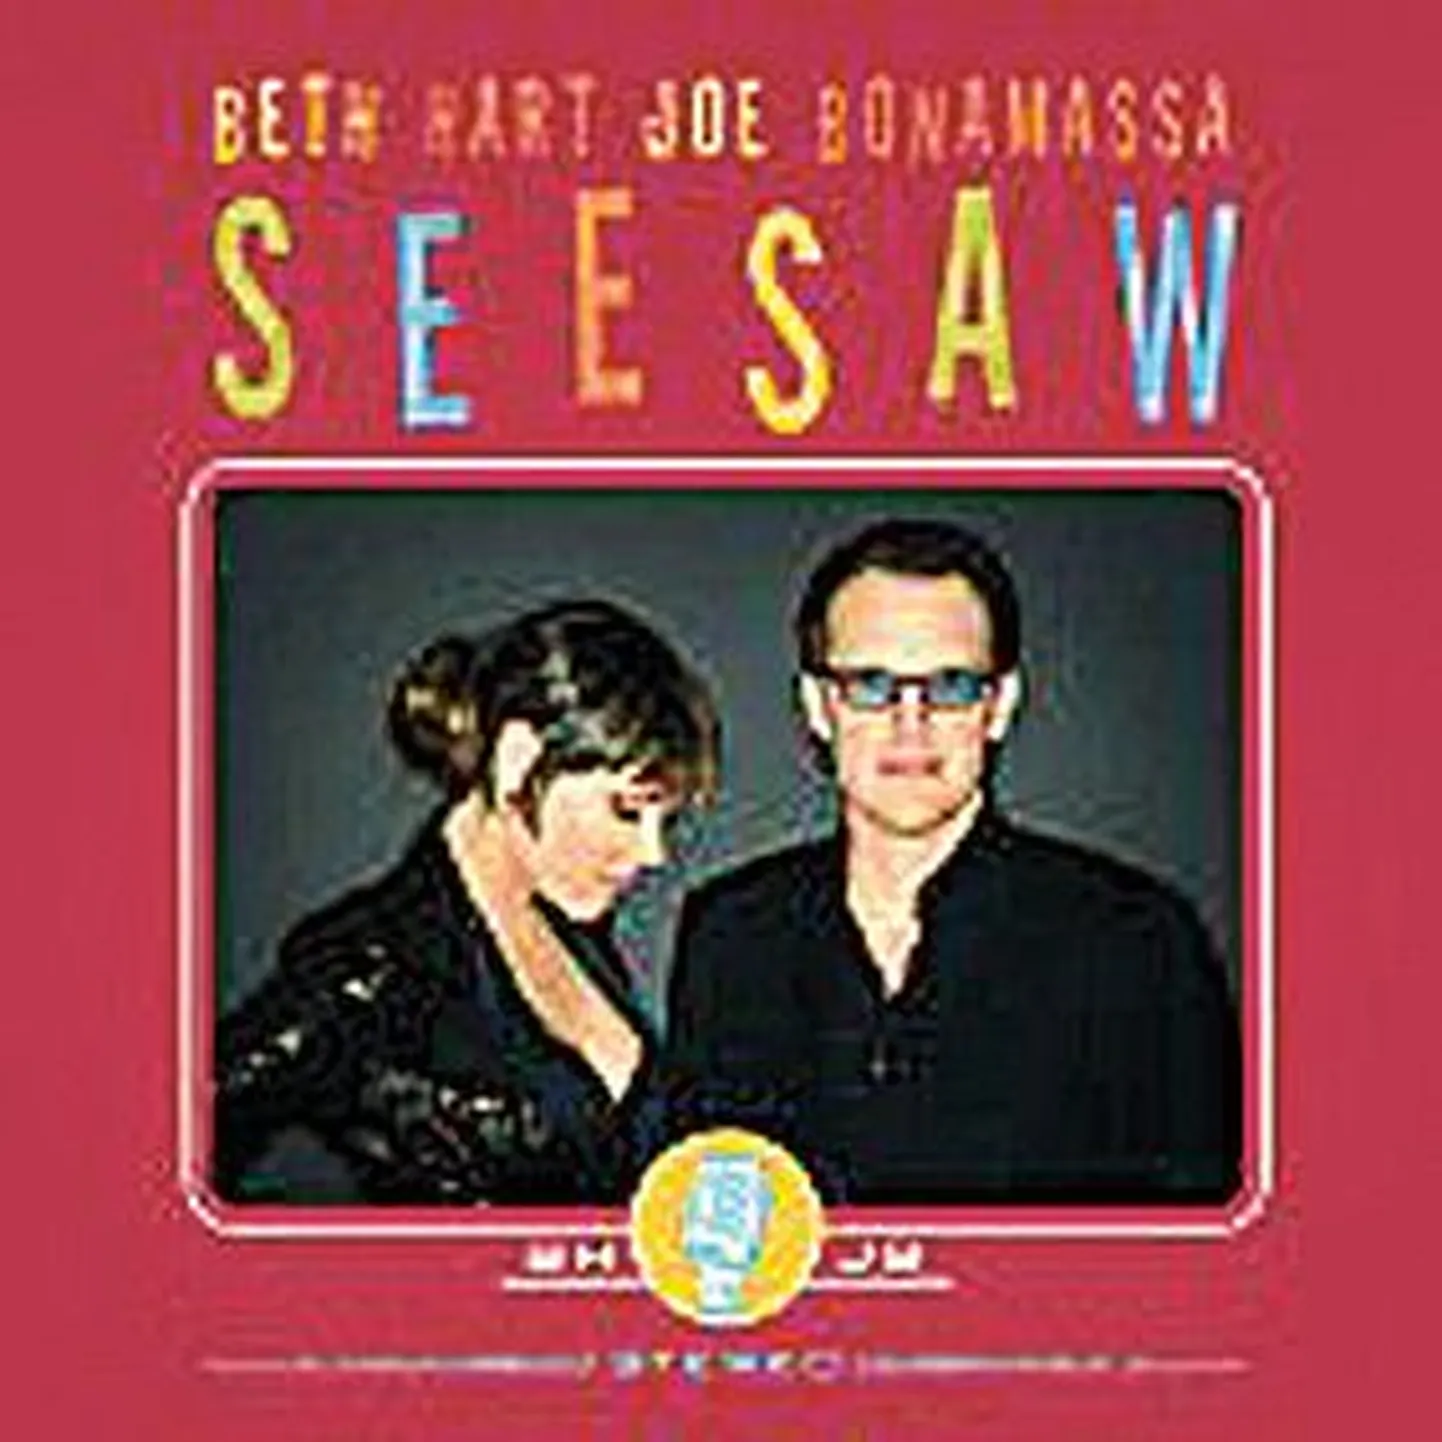 Beth Hart & Joe Bonamassa
Seesaw (Provogue)